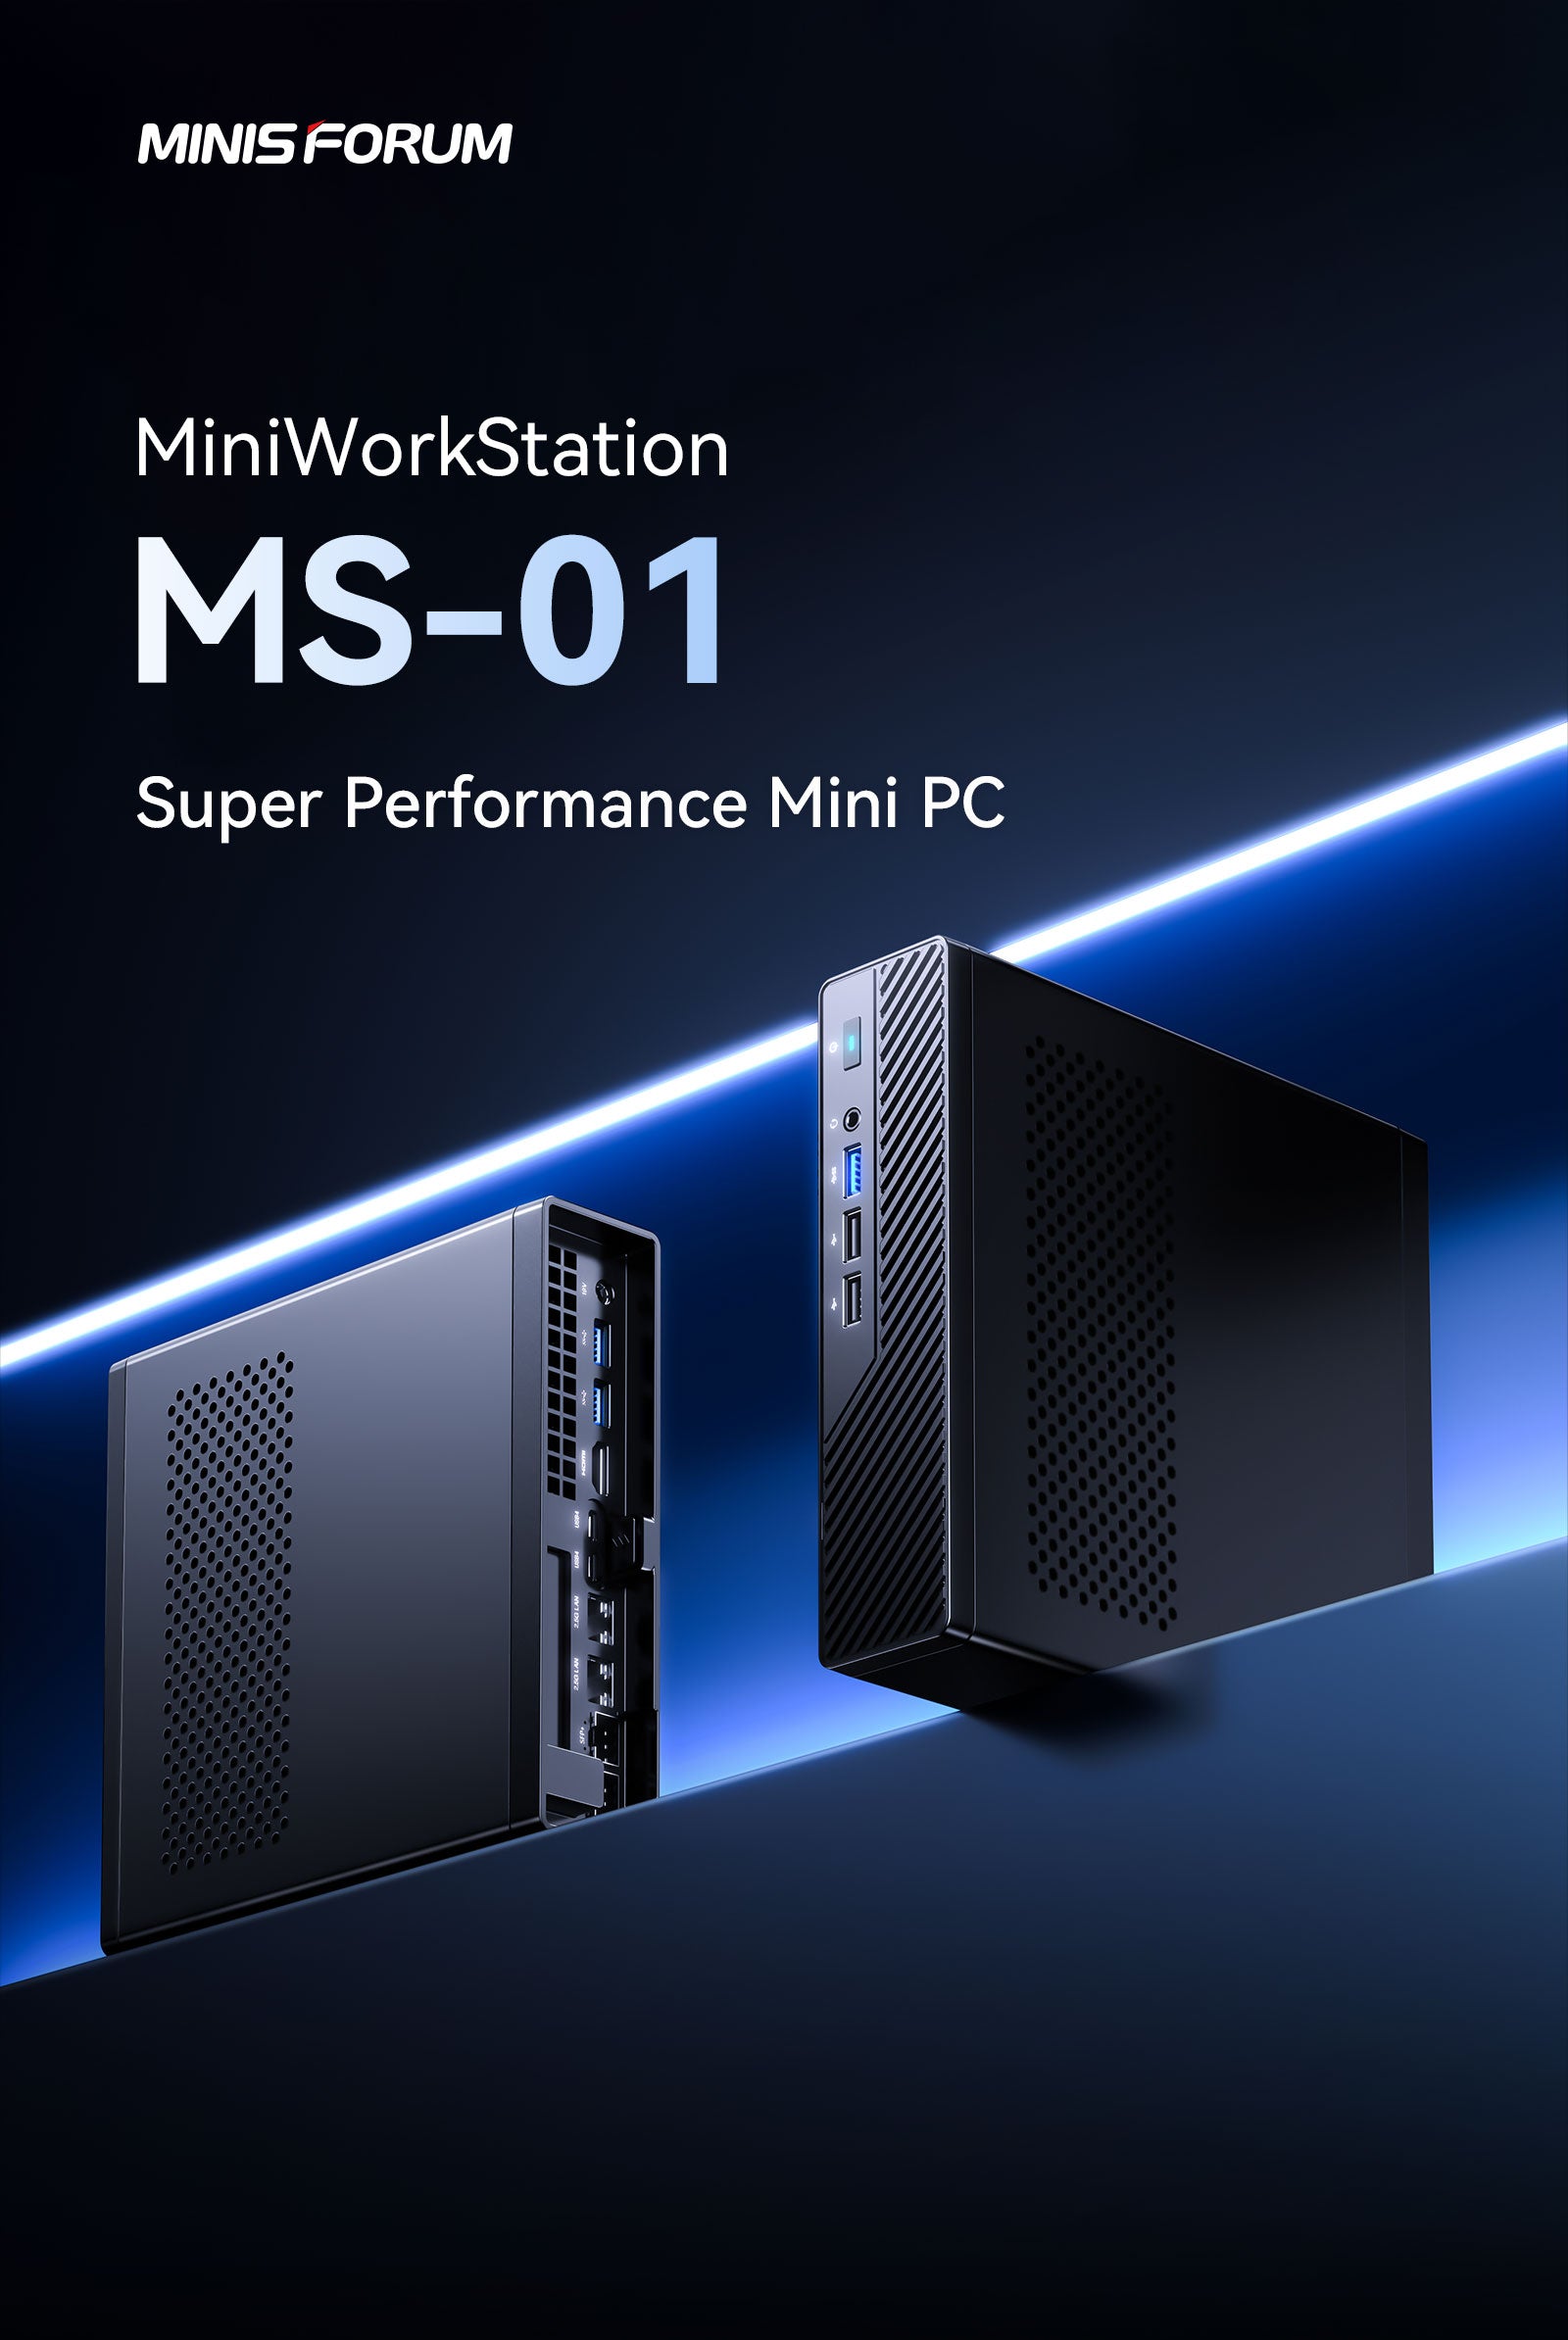 Minisforum Neptune HX99G: Gaming-ready mini PC with Ryzen 9 6900HX & RX  6600M